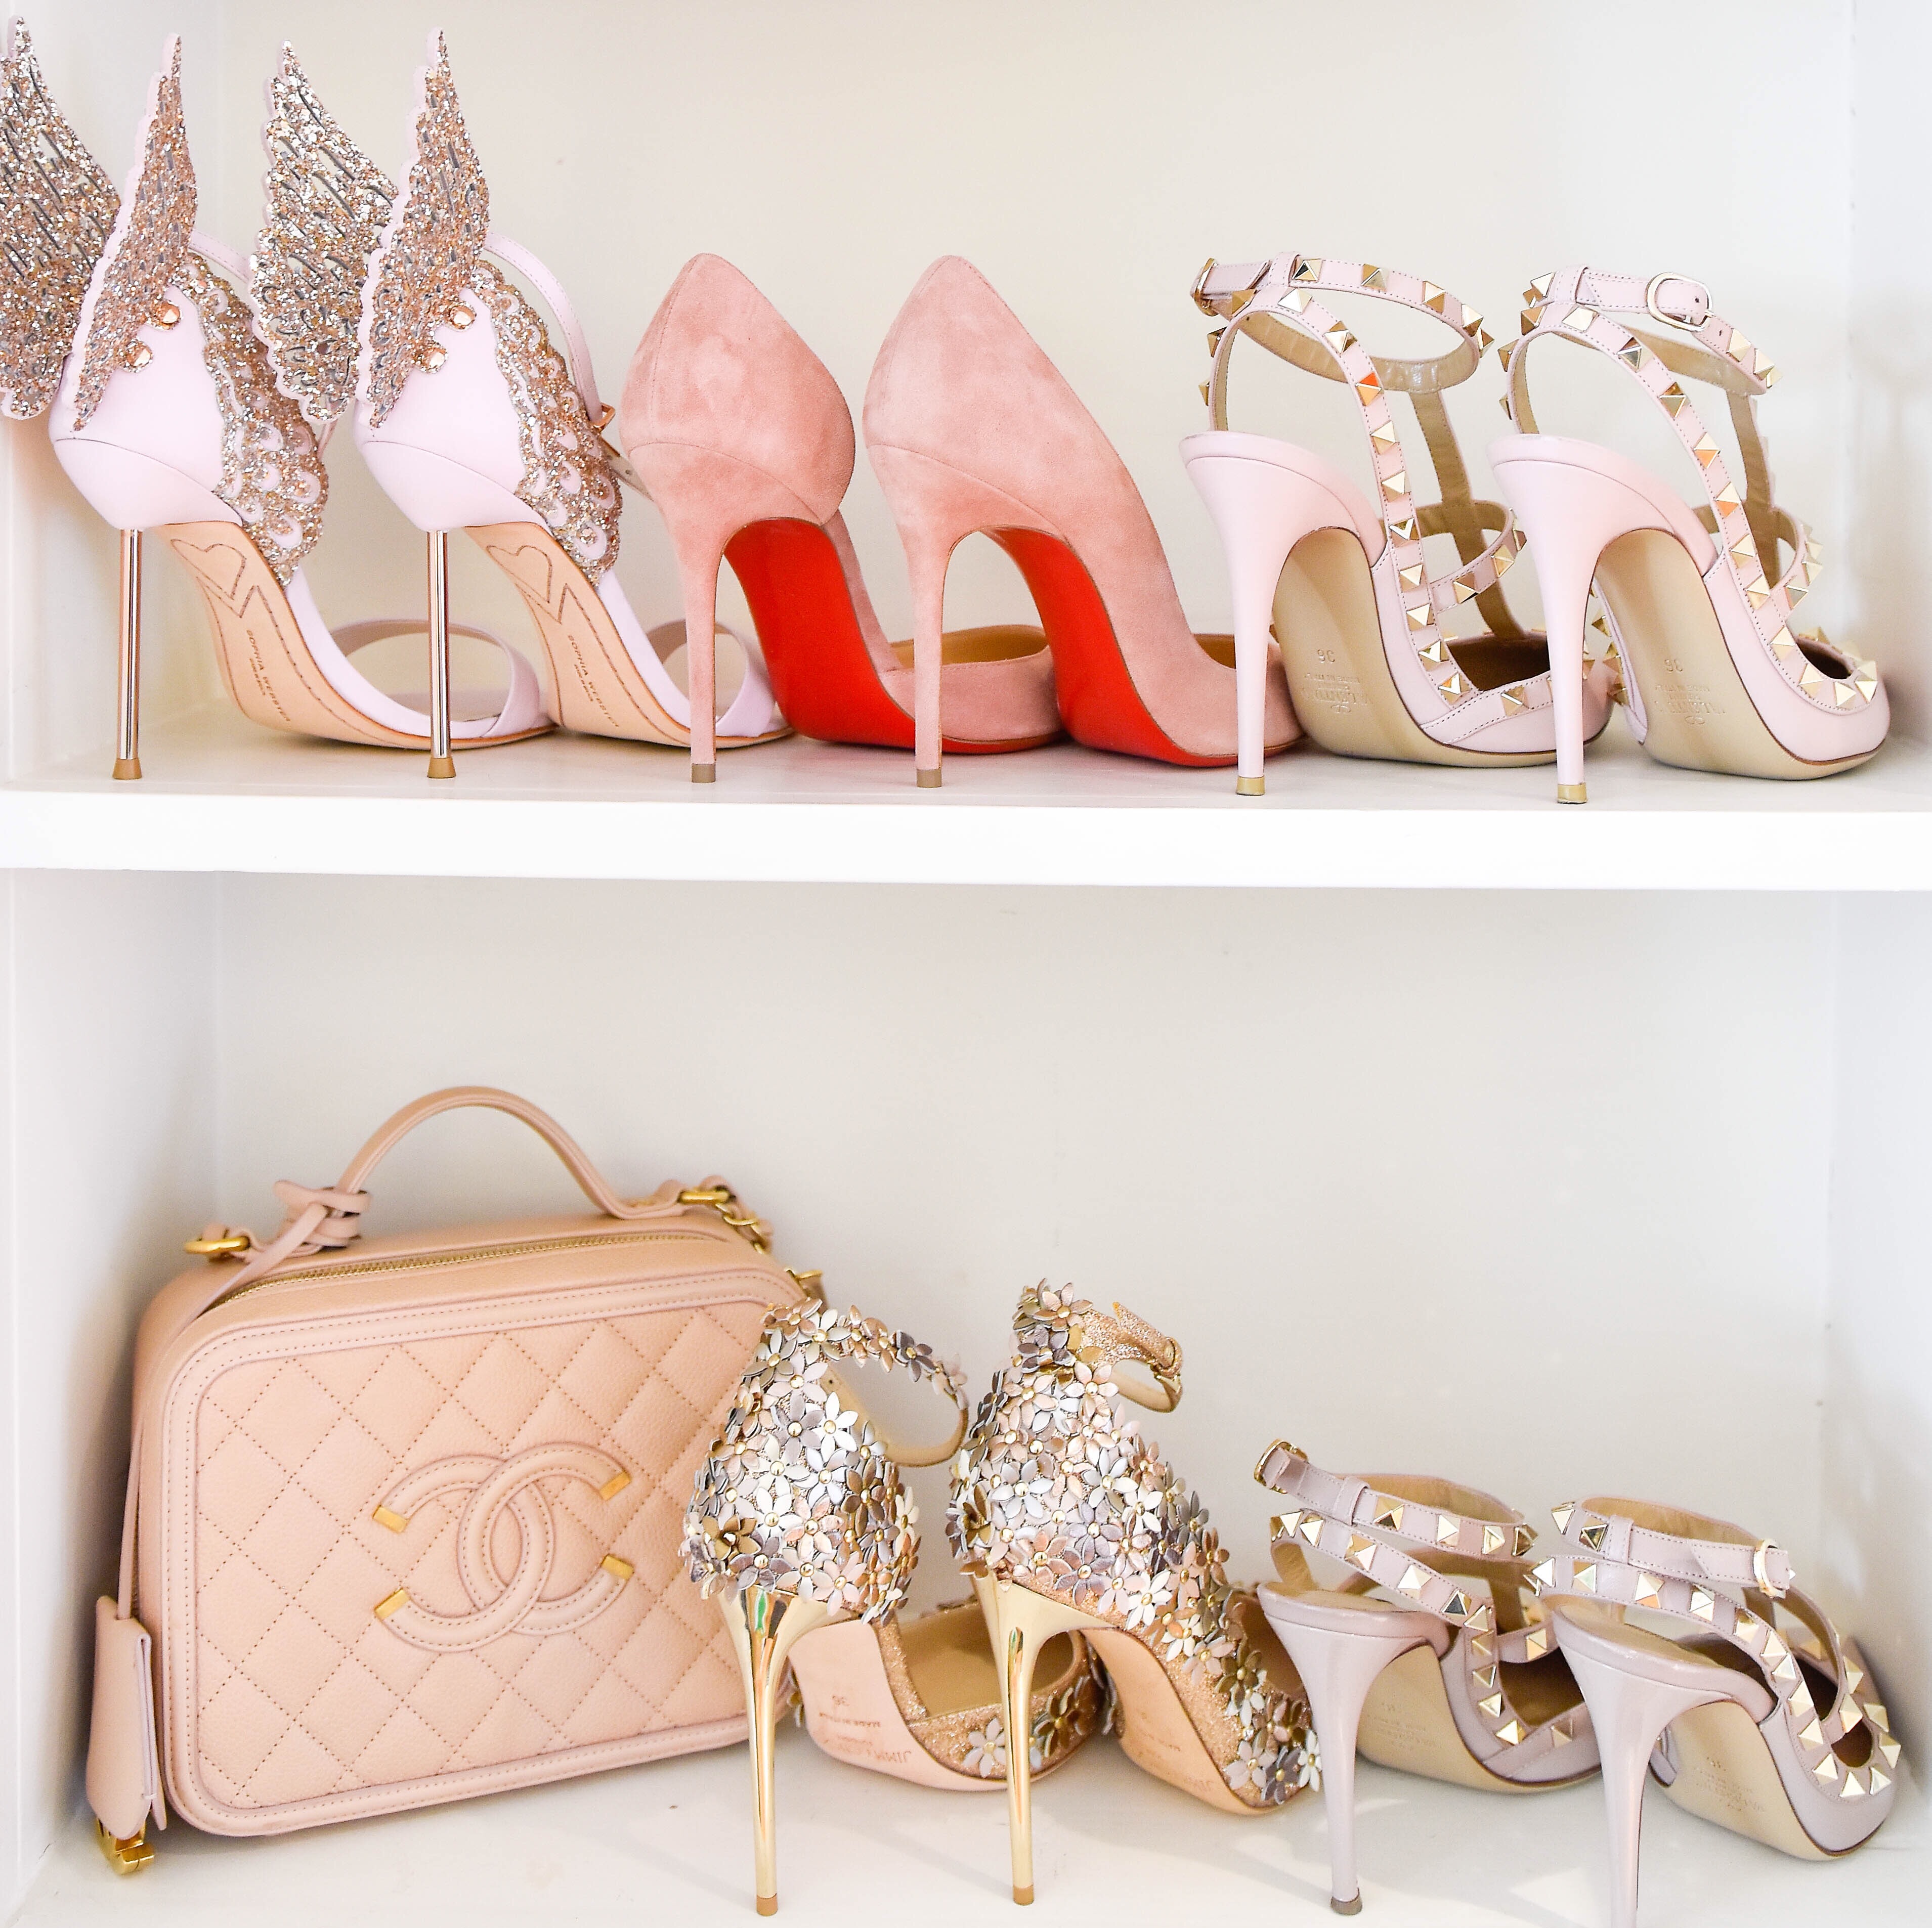 chanel-bag, sophia-webster-heels, valentino-rockstuds, pink-valentino-rockstuds, louboutins, pink-louboutins, jimmy-choo-heels, valentino-heels, valentino-rockstuds